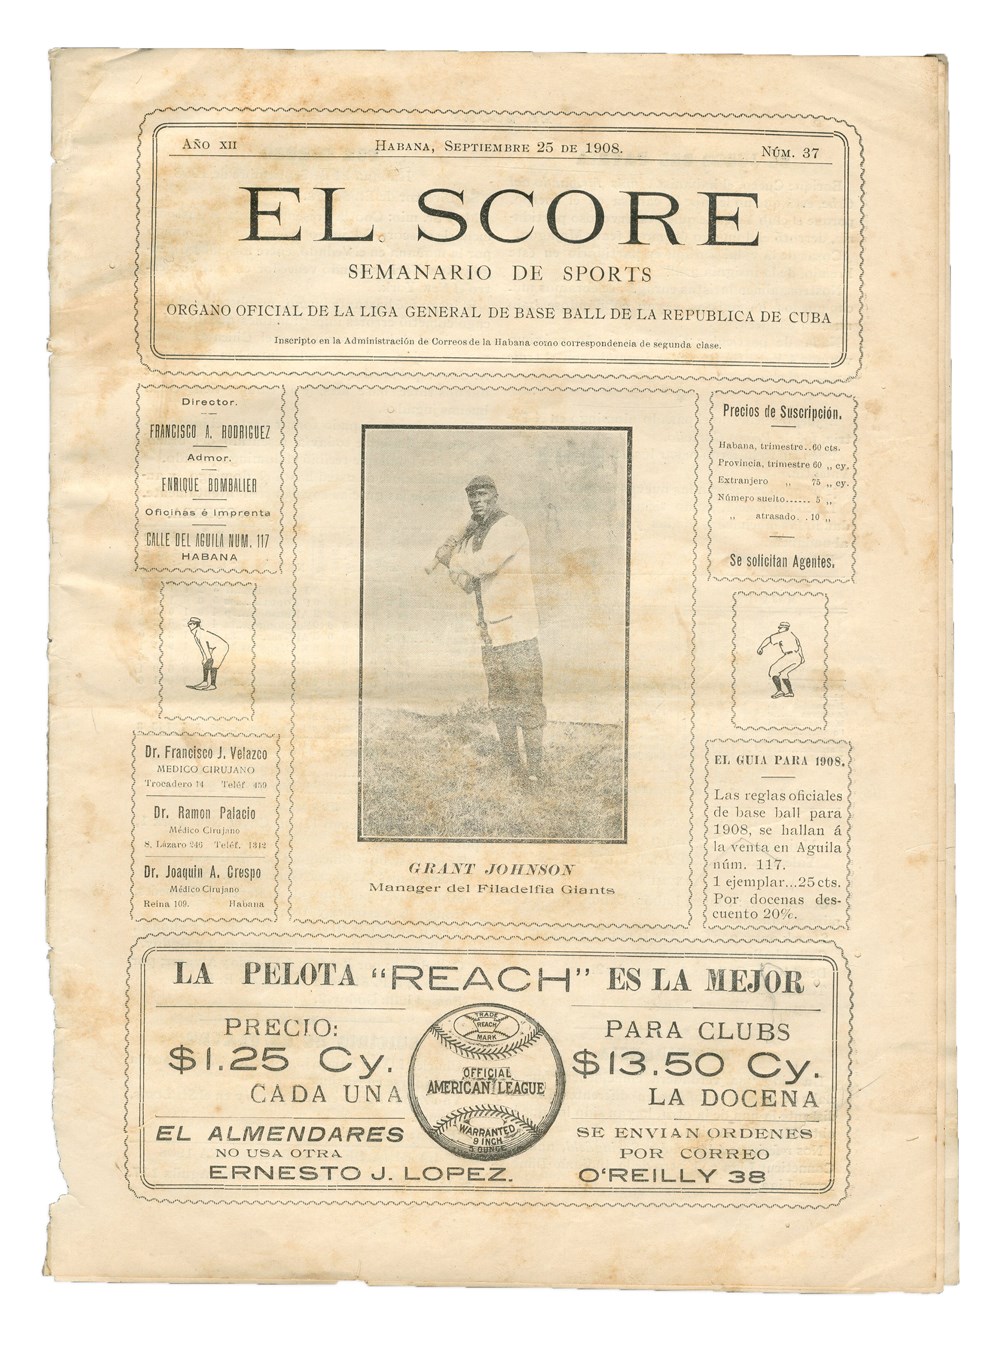 Negro League, Latin, Japanese & Int'l Baseball - 1908 Grant "Home Run" Johnson Cuban Program/Magazine - Legendary Negro Leaguer's Only Known Cover